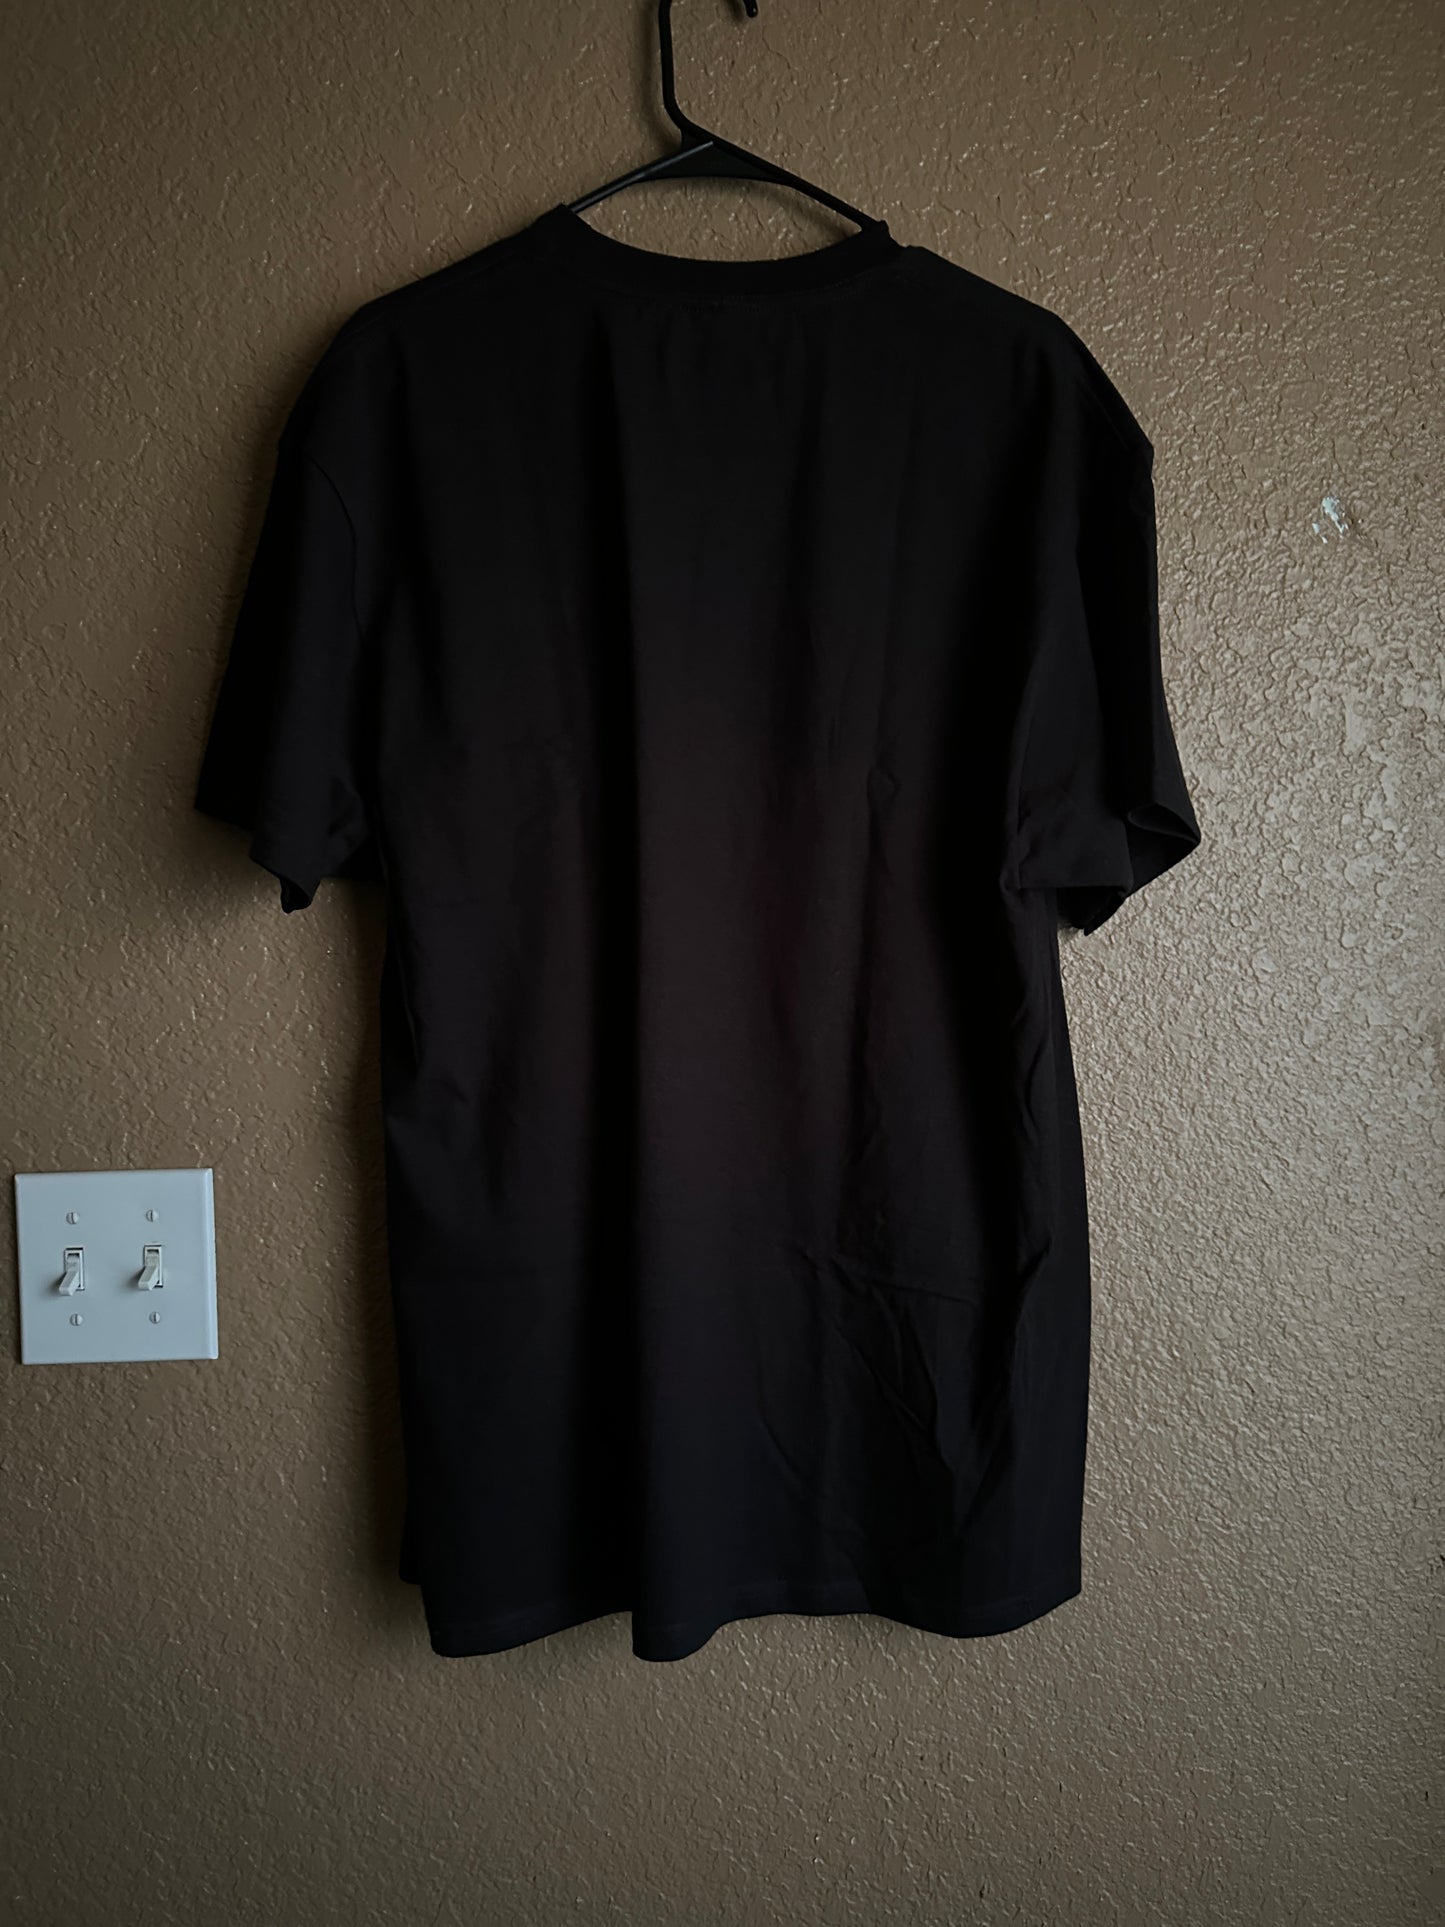 Spencer’s Hasbula T-Shirt (size XL)